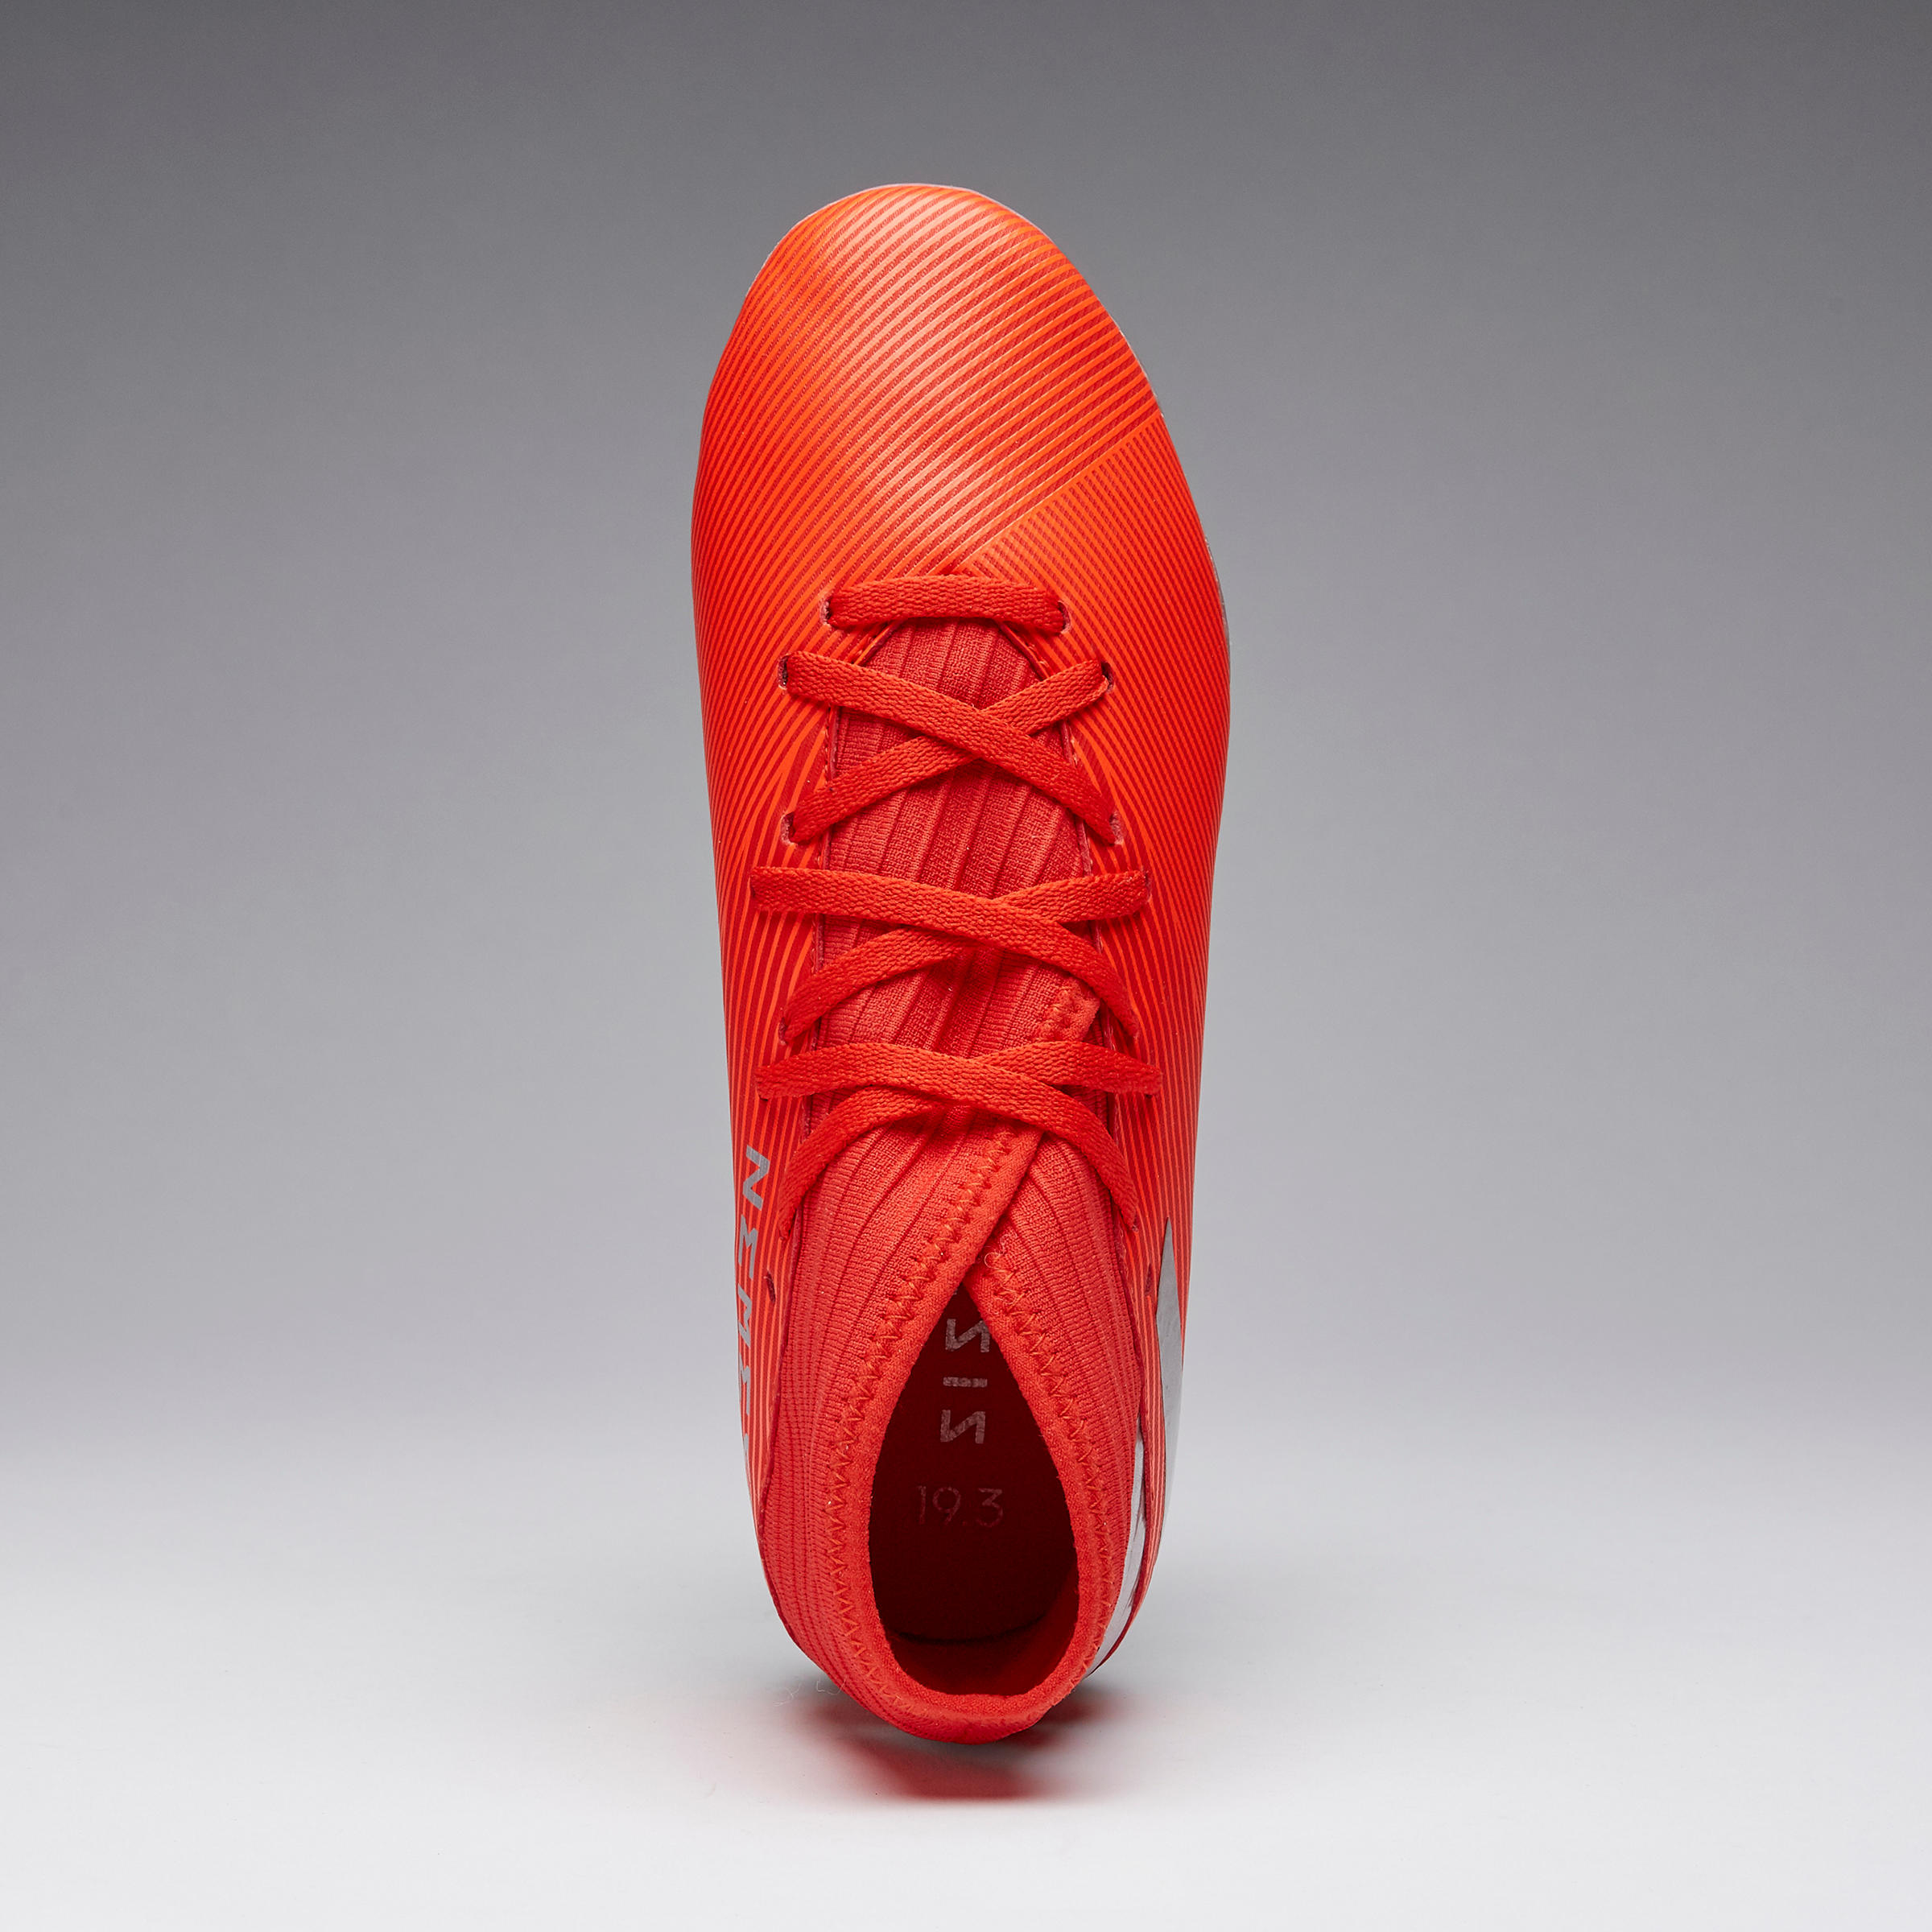 botas futbol adidas naranjas